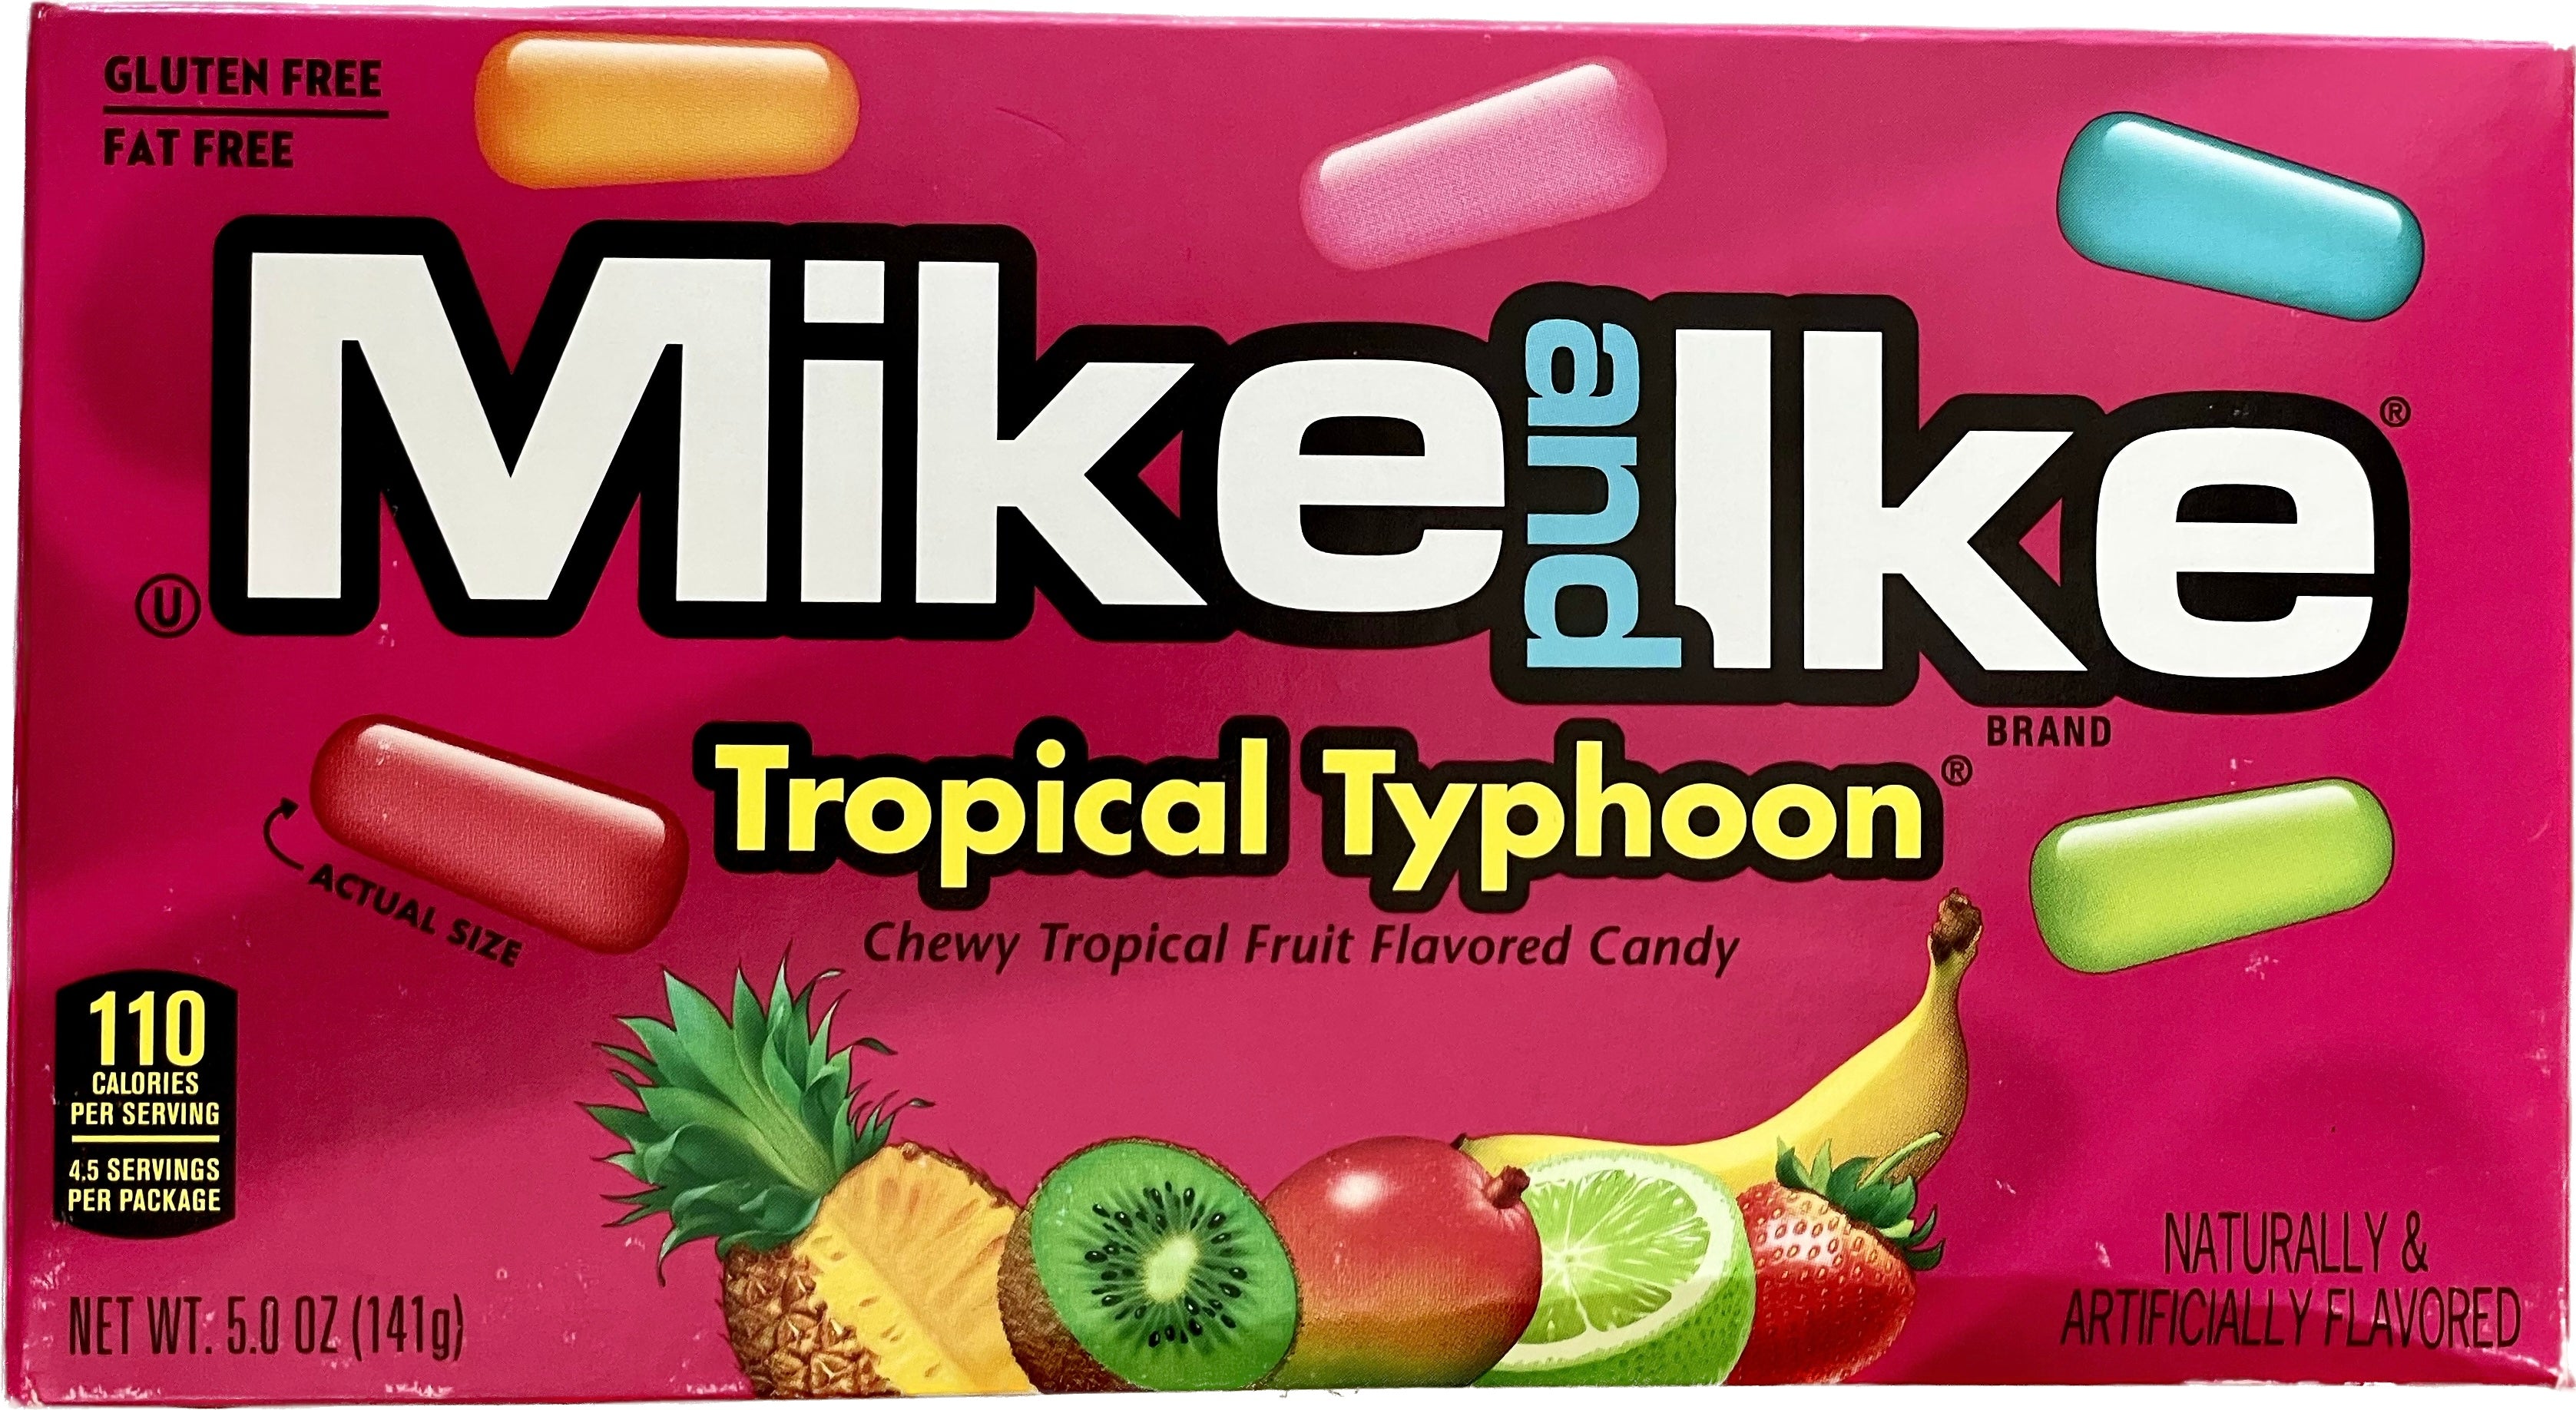 Mike and Ike - Tropical Typhoon 141g